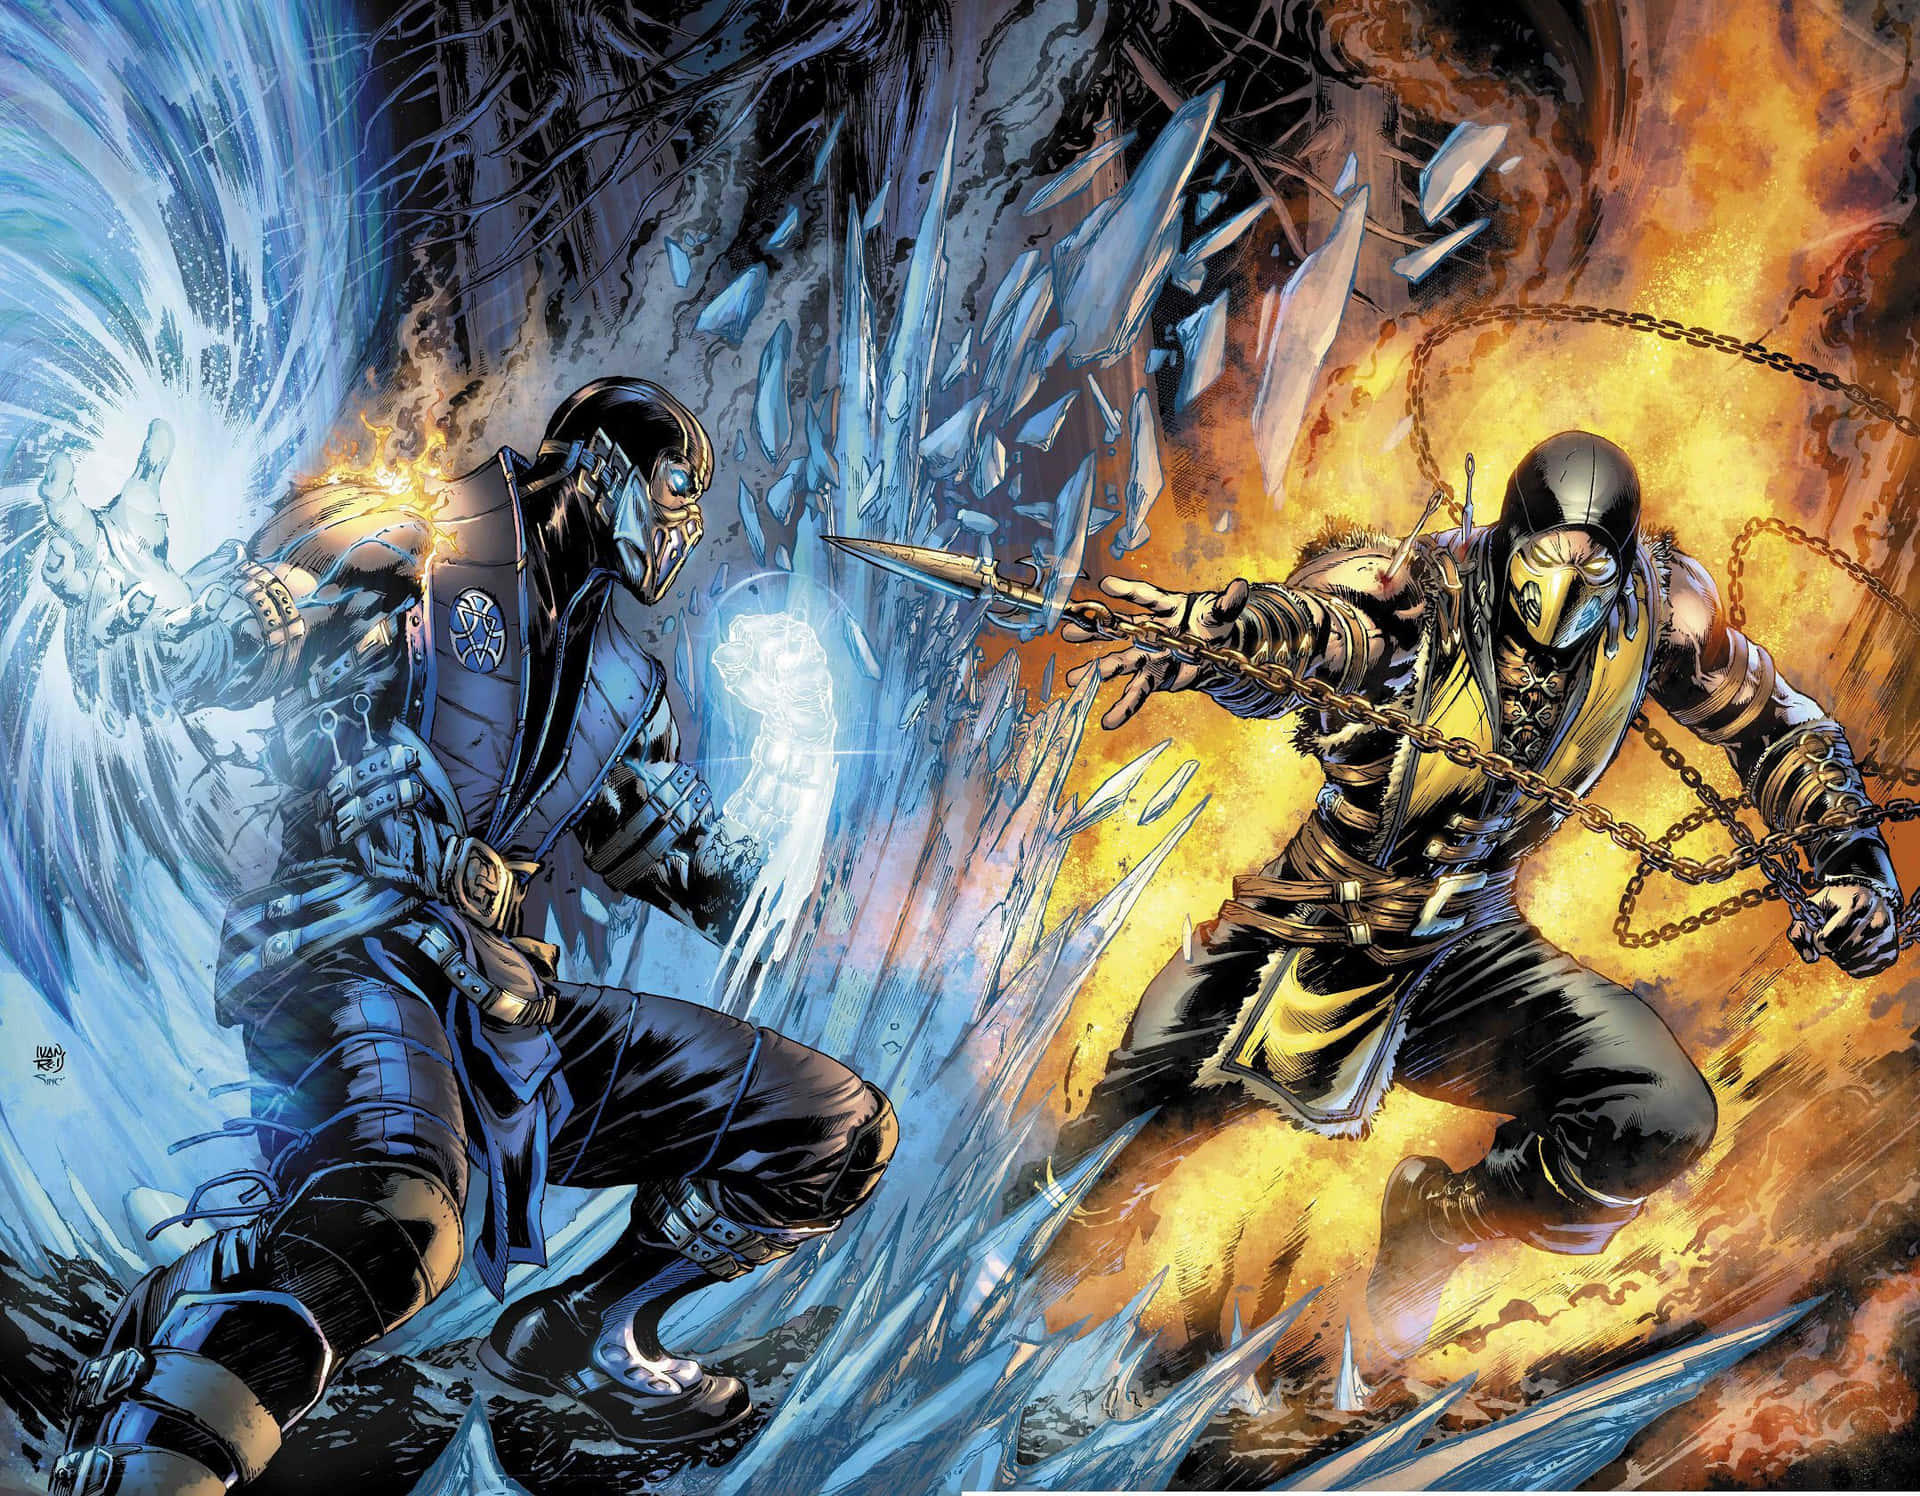 Sub-zero, the Icy Ninja Warrior from Mortal Kombat Wallpaper